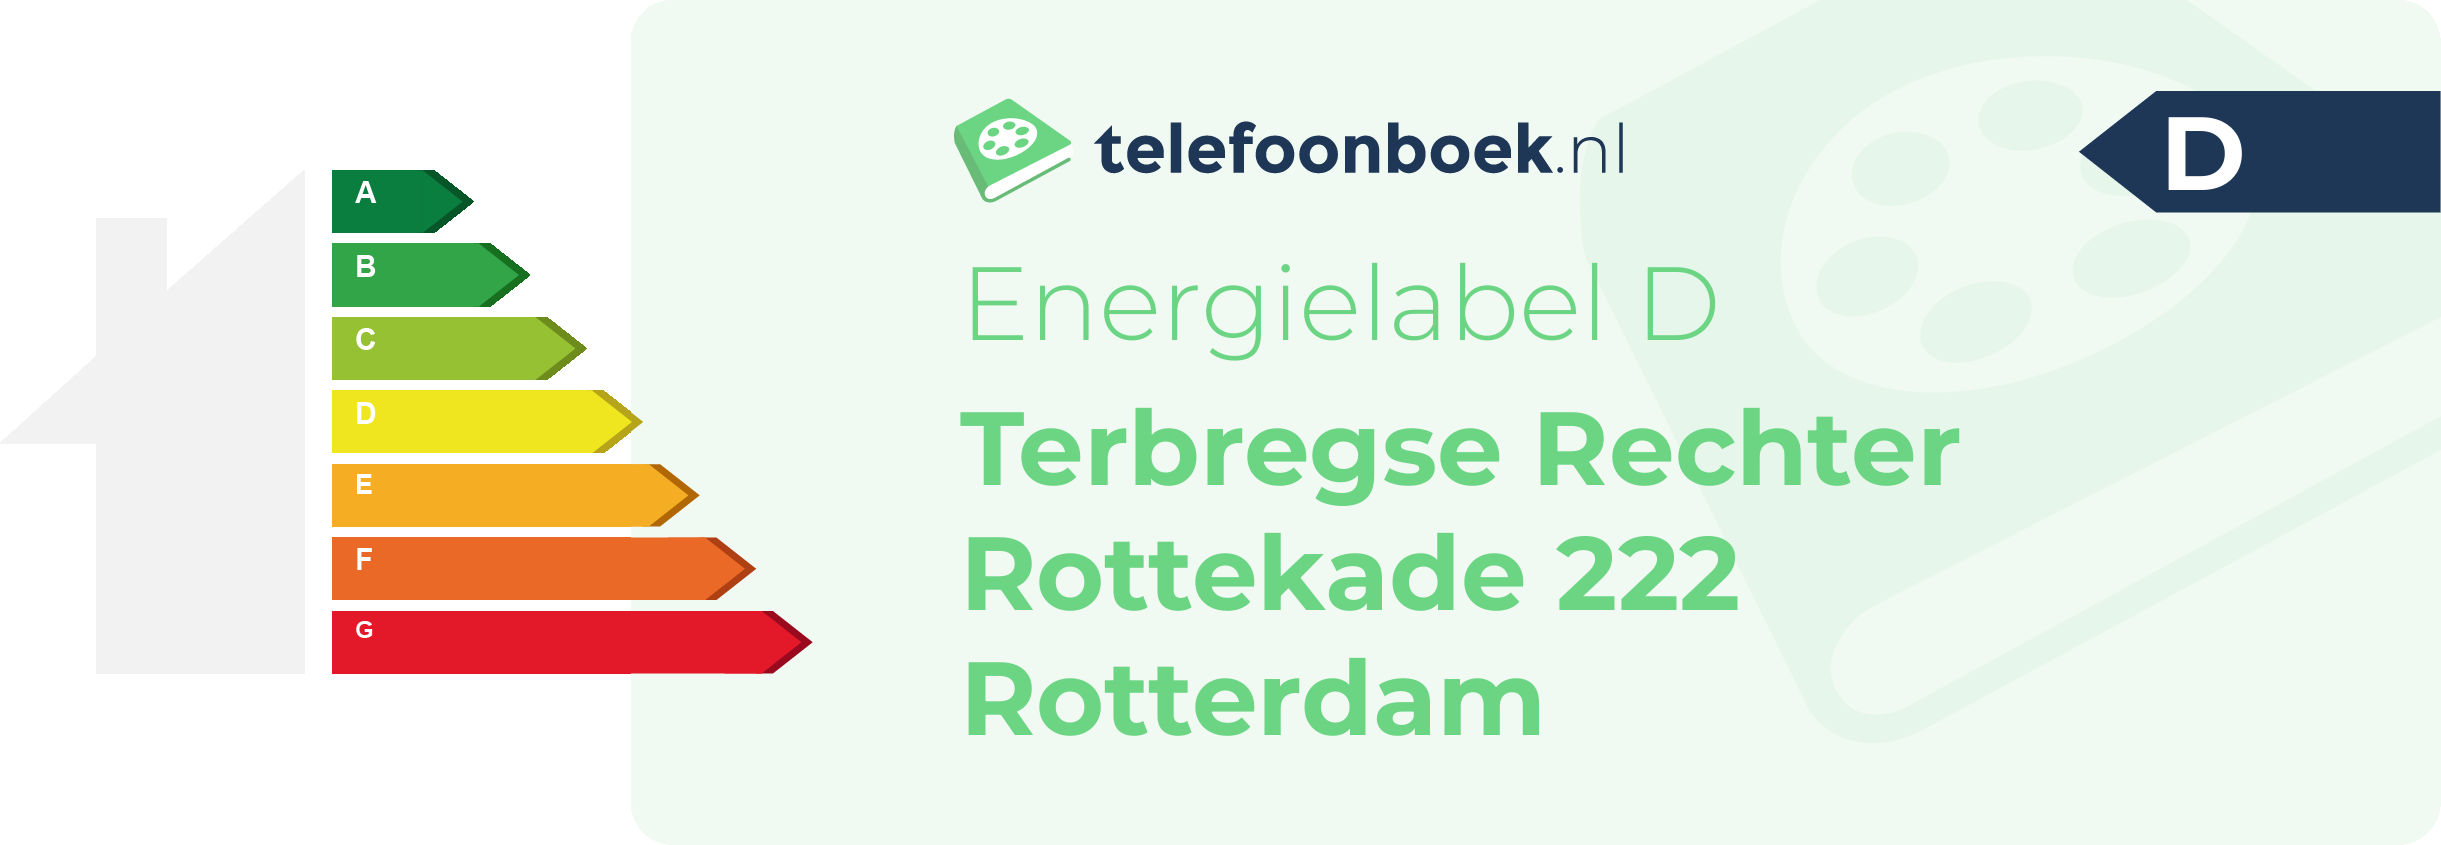 Energielabel Terbregse Rechter Rottekade 222 Rotterdam